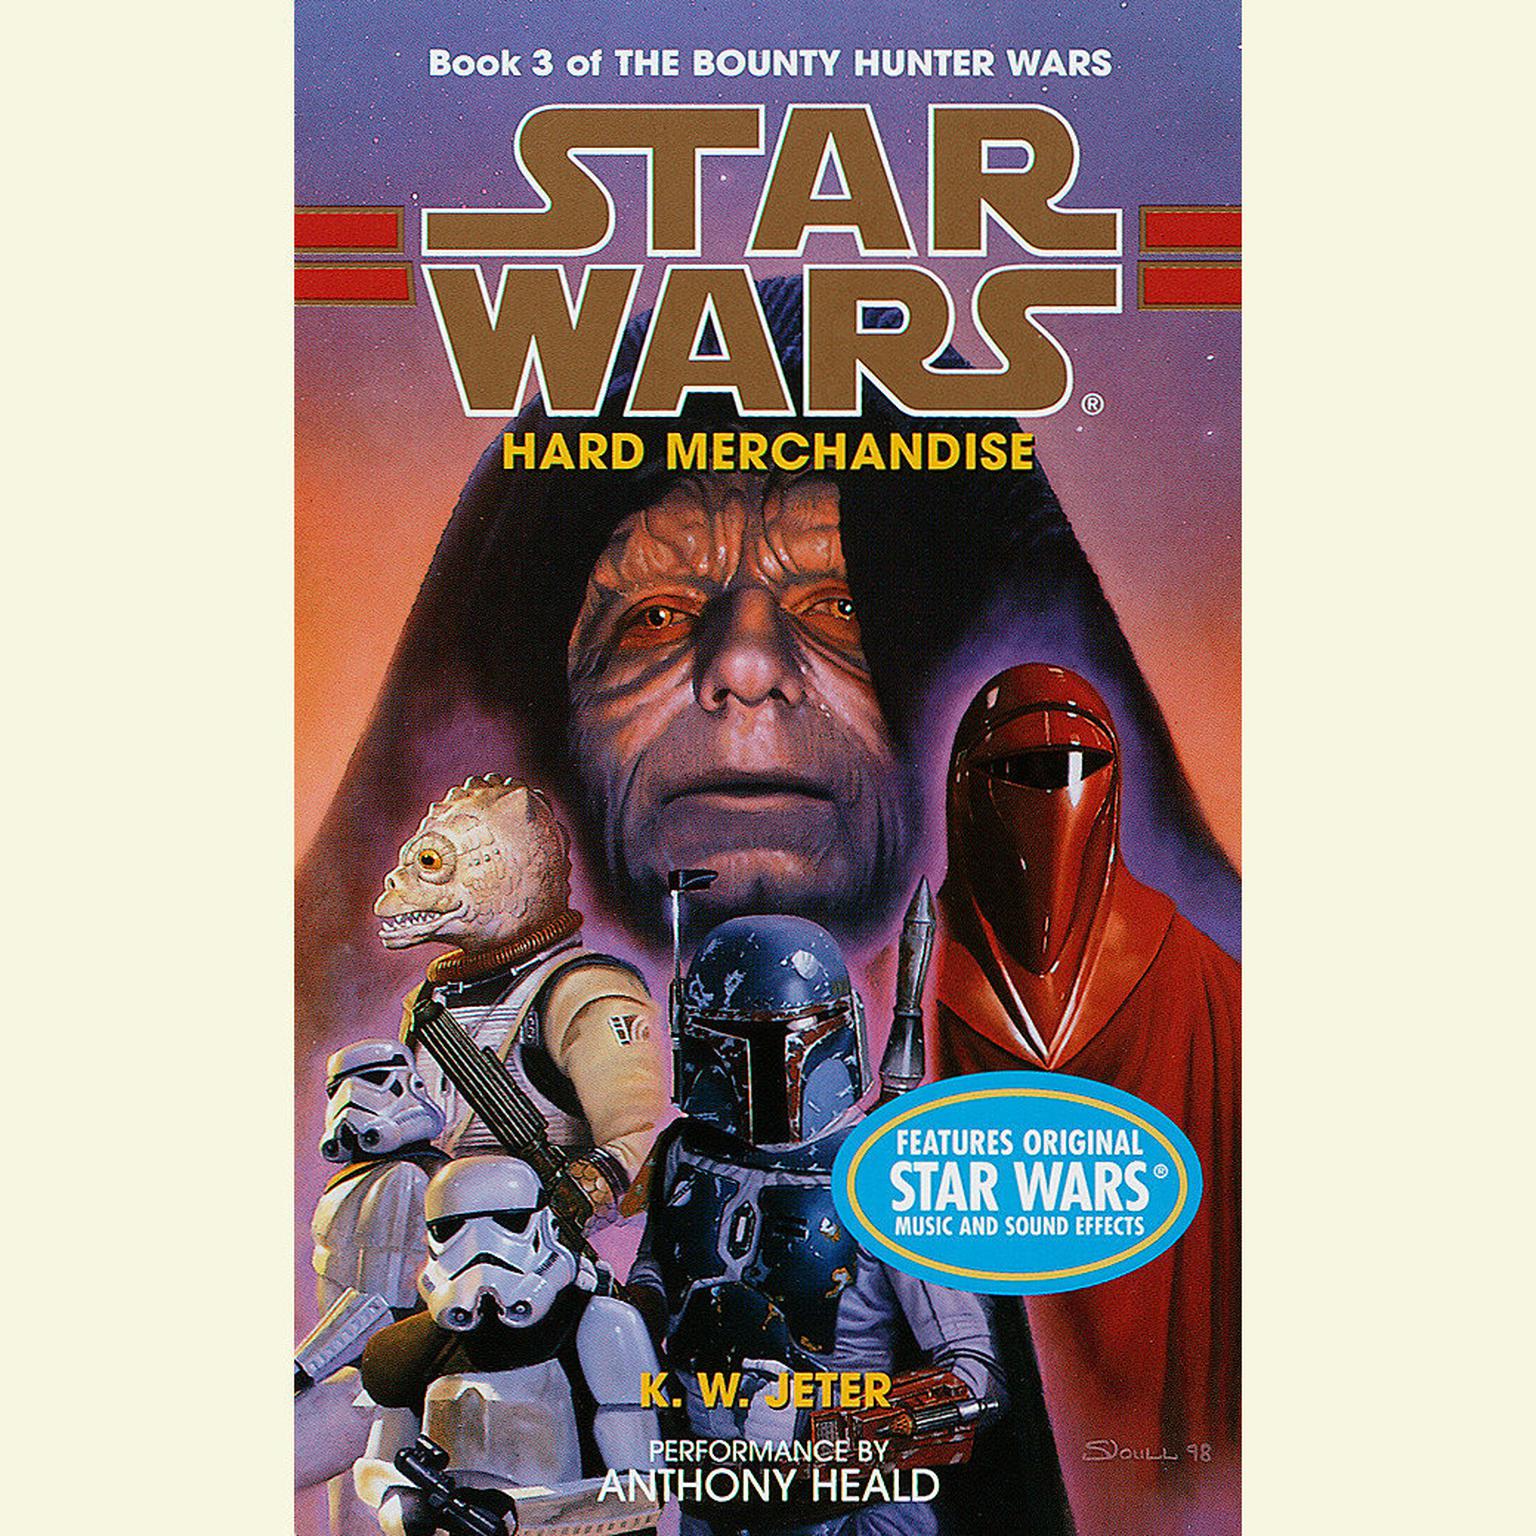 Star Wars: The Bounty Hunter Wars: Hard Merchandise (Abridged): Book 3 Audiobook, by K. W. Jeter